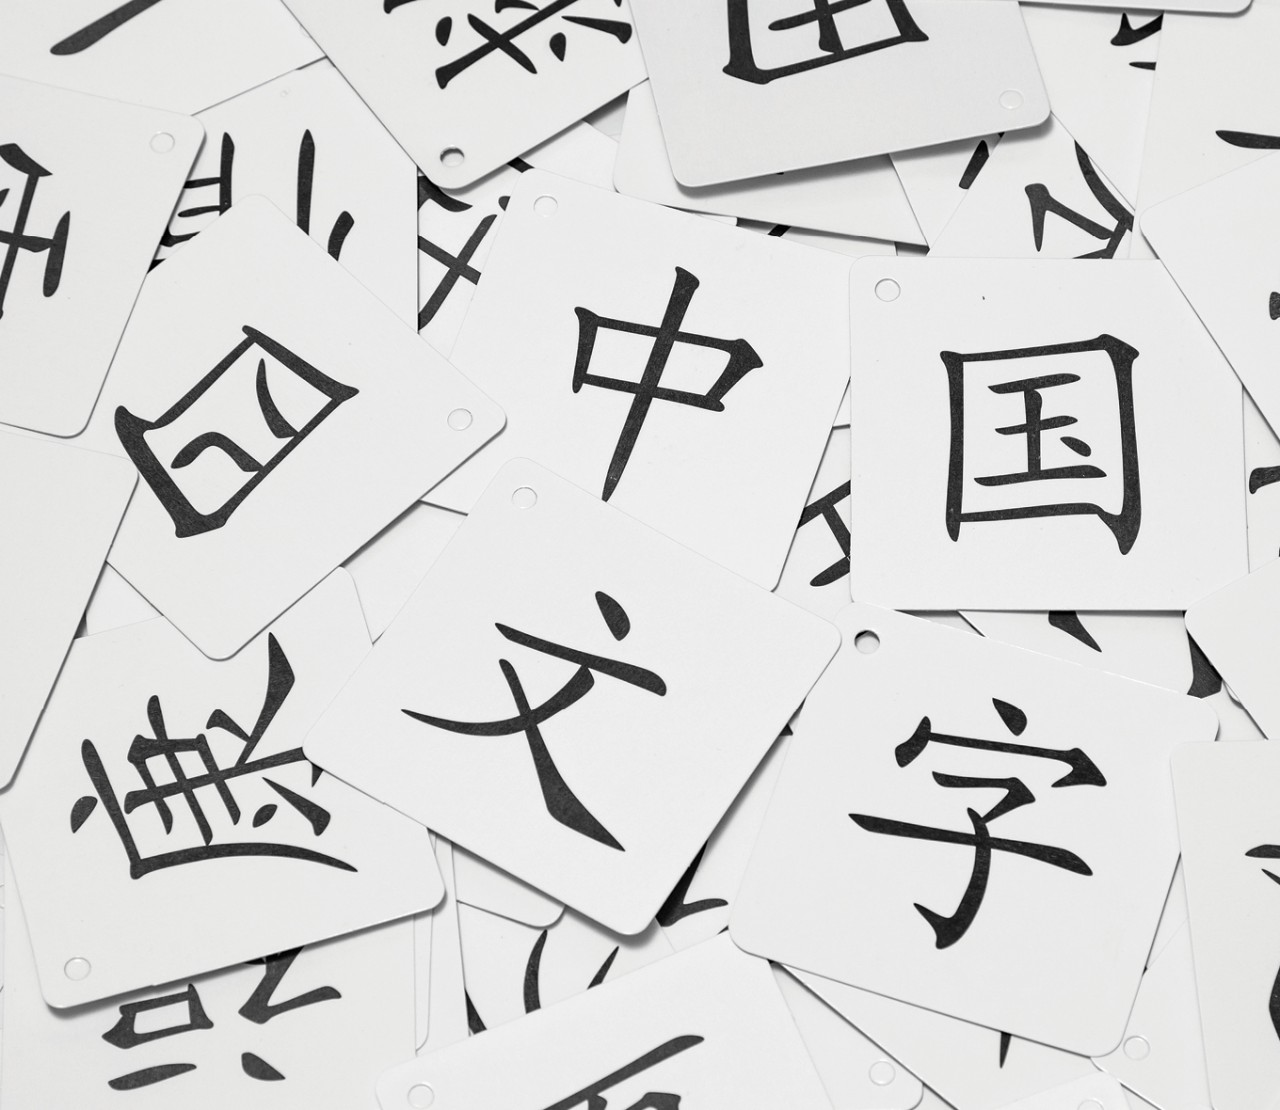 Chinese language characters